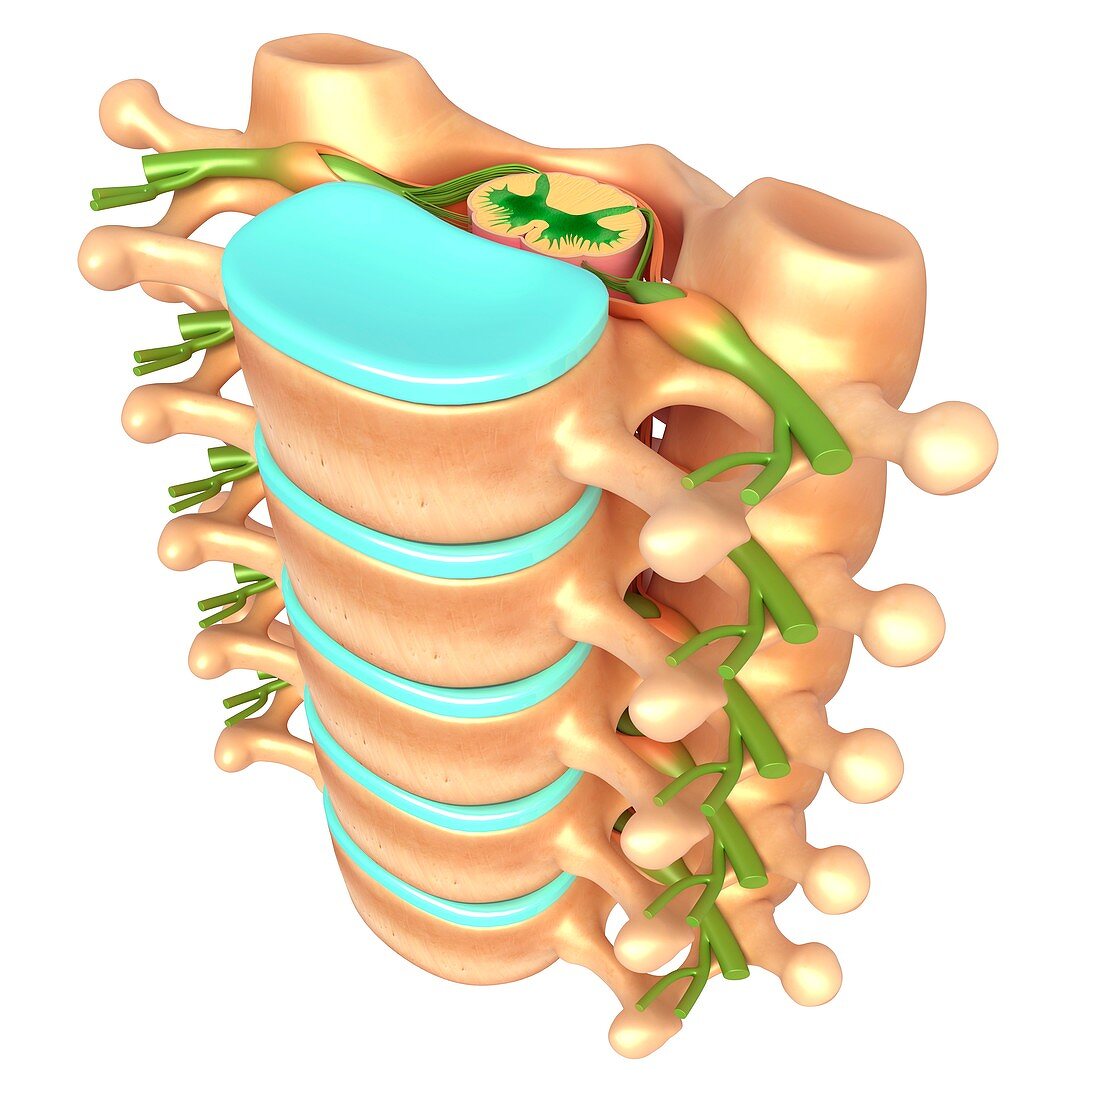 Lumbar vertebrae and spinal cord, illustration